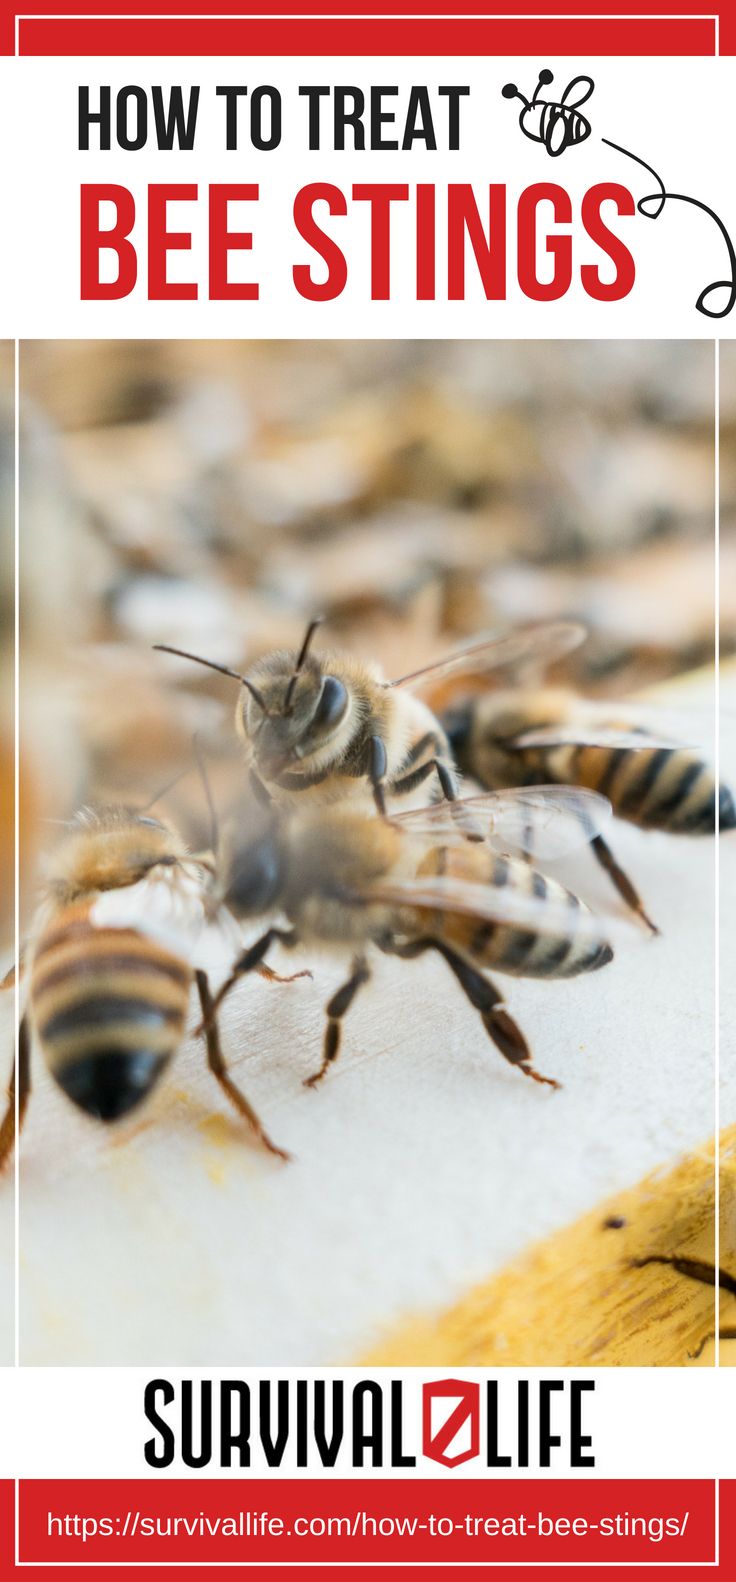 How To Treat Bee Stings | https://survivallife.com/how-to-treat-bee-stings/